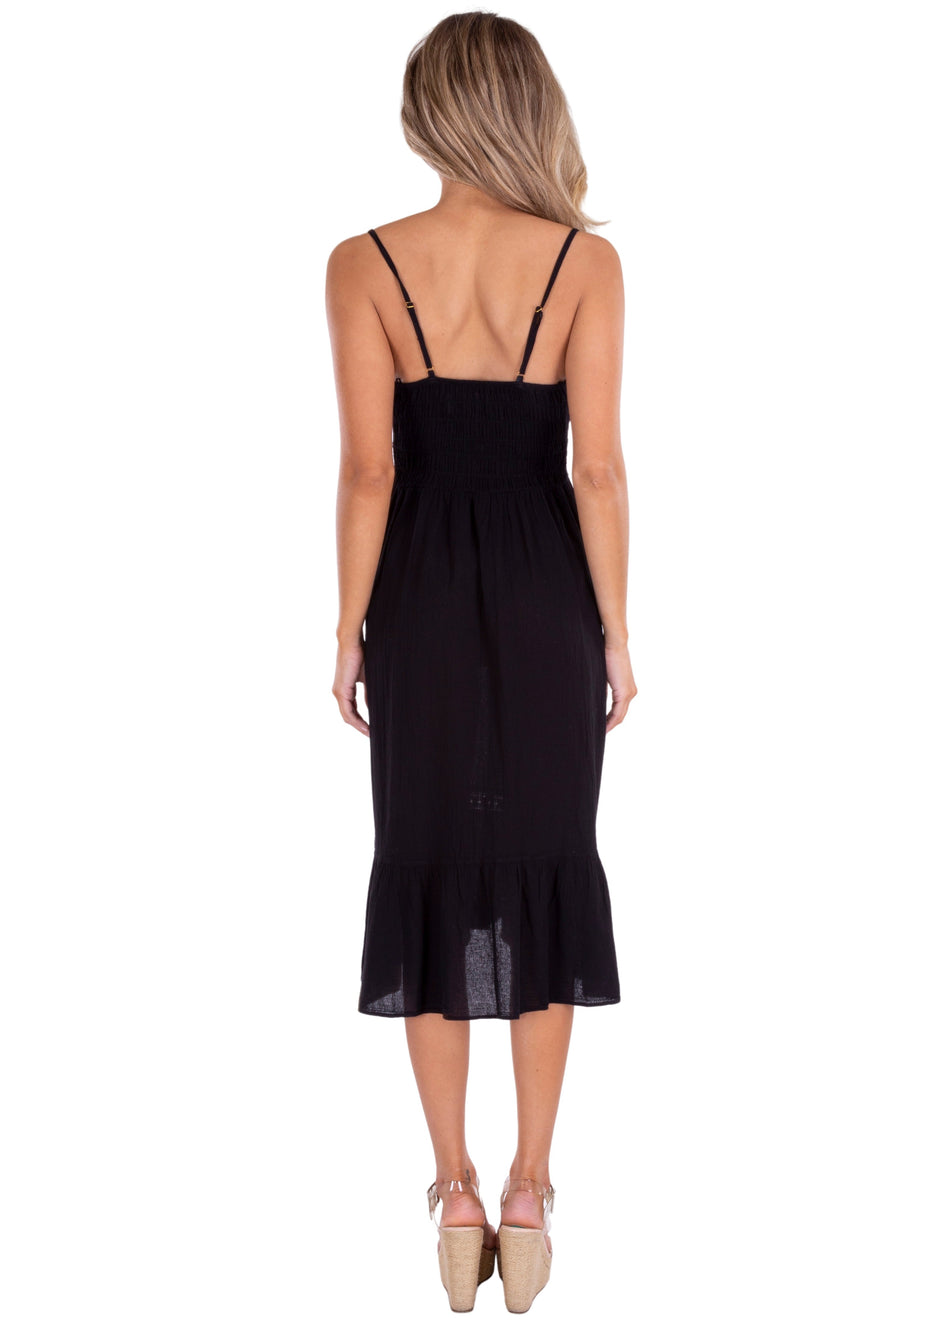 NW1528 - Black Cotton Dress